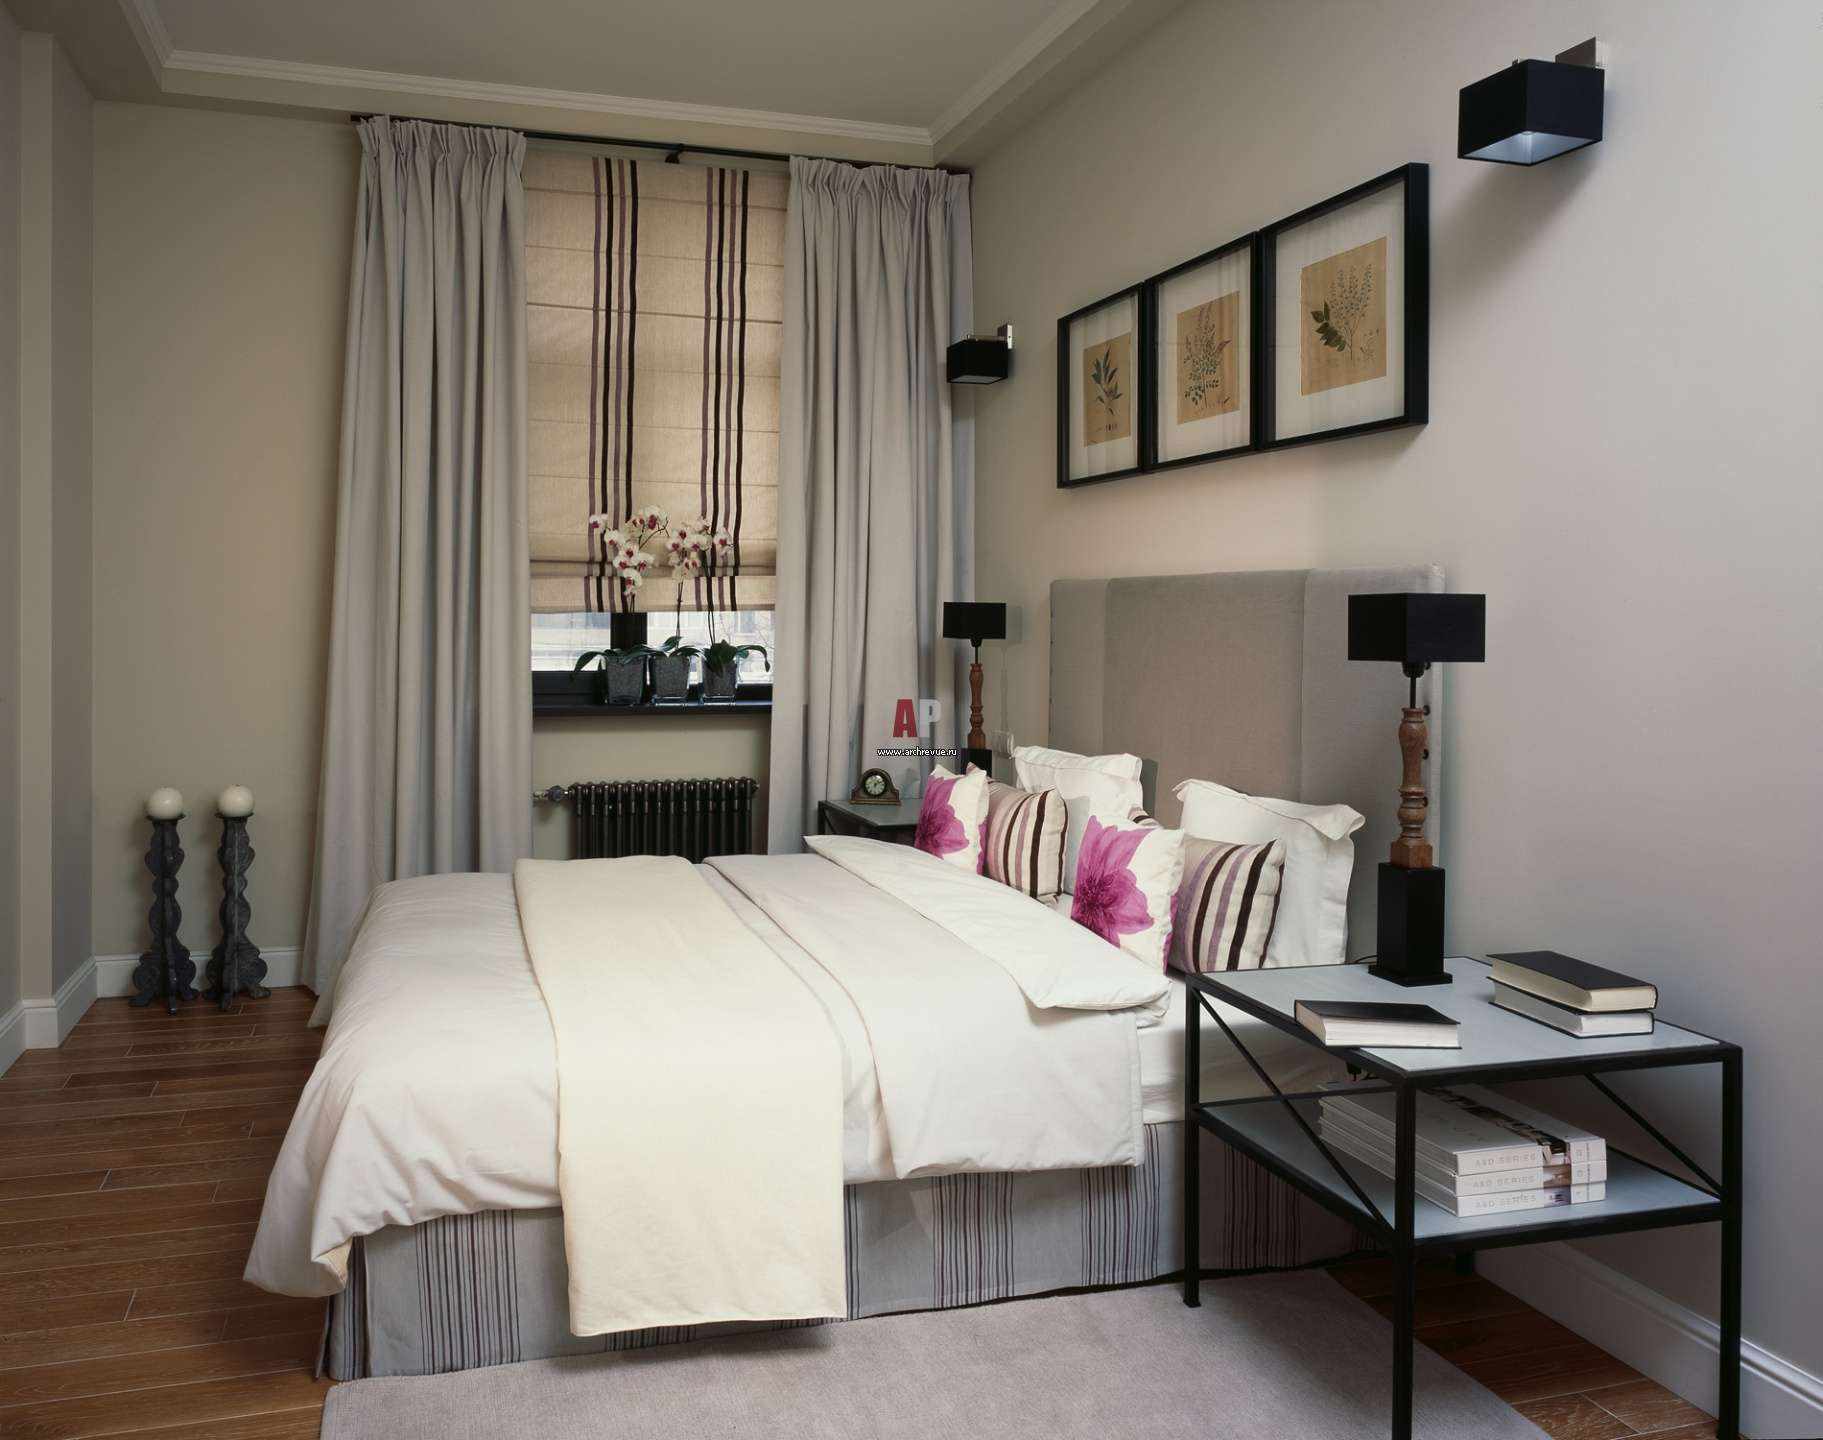 option of a beautiful bedroom interior